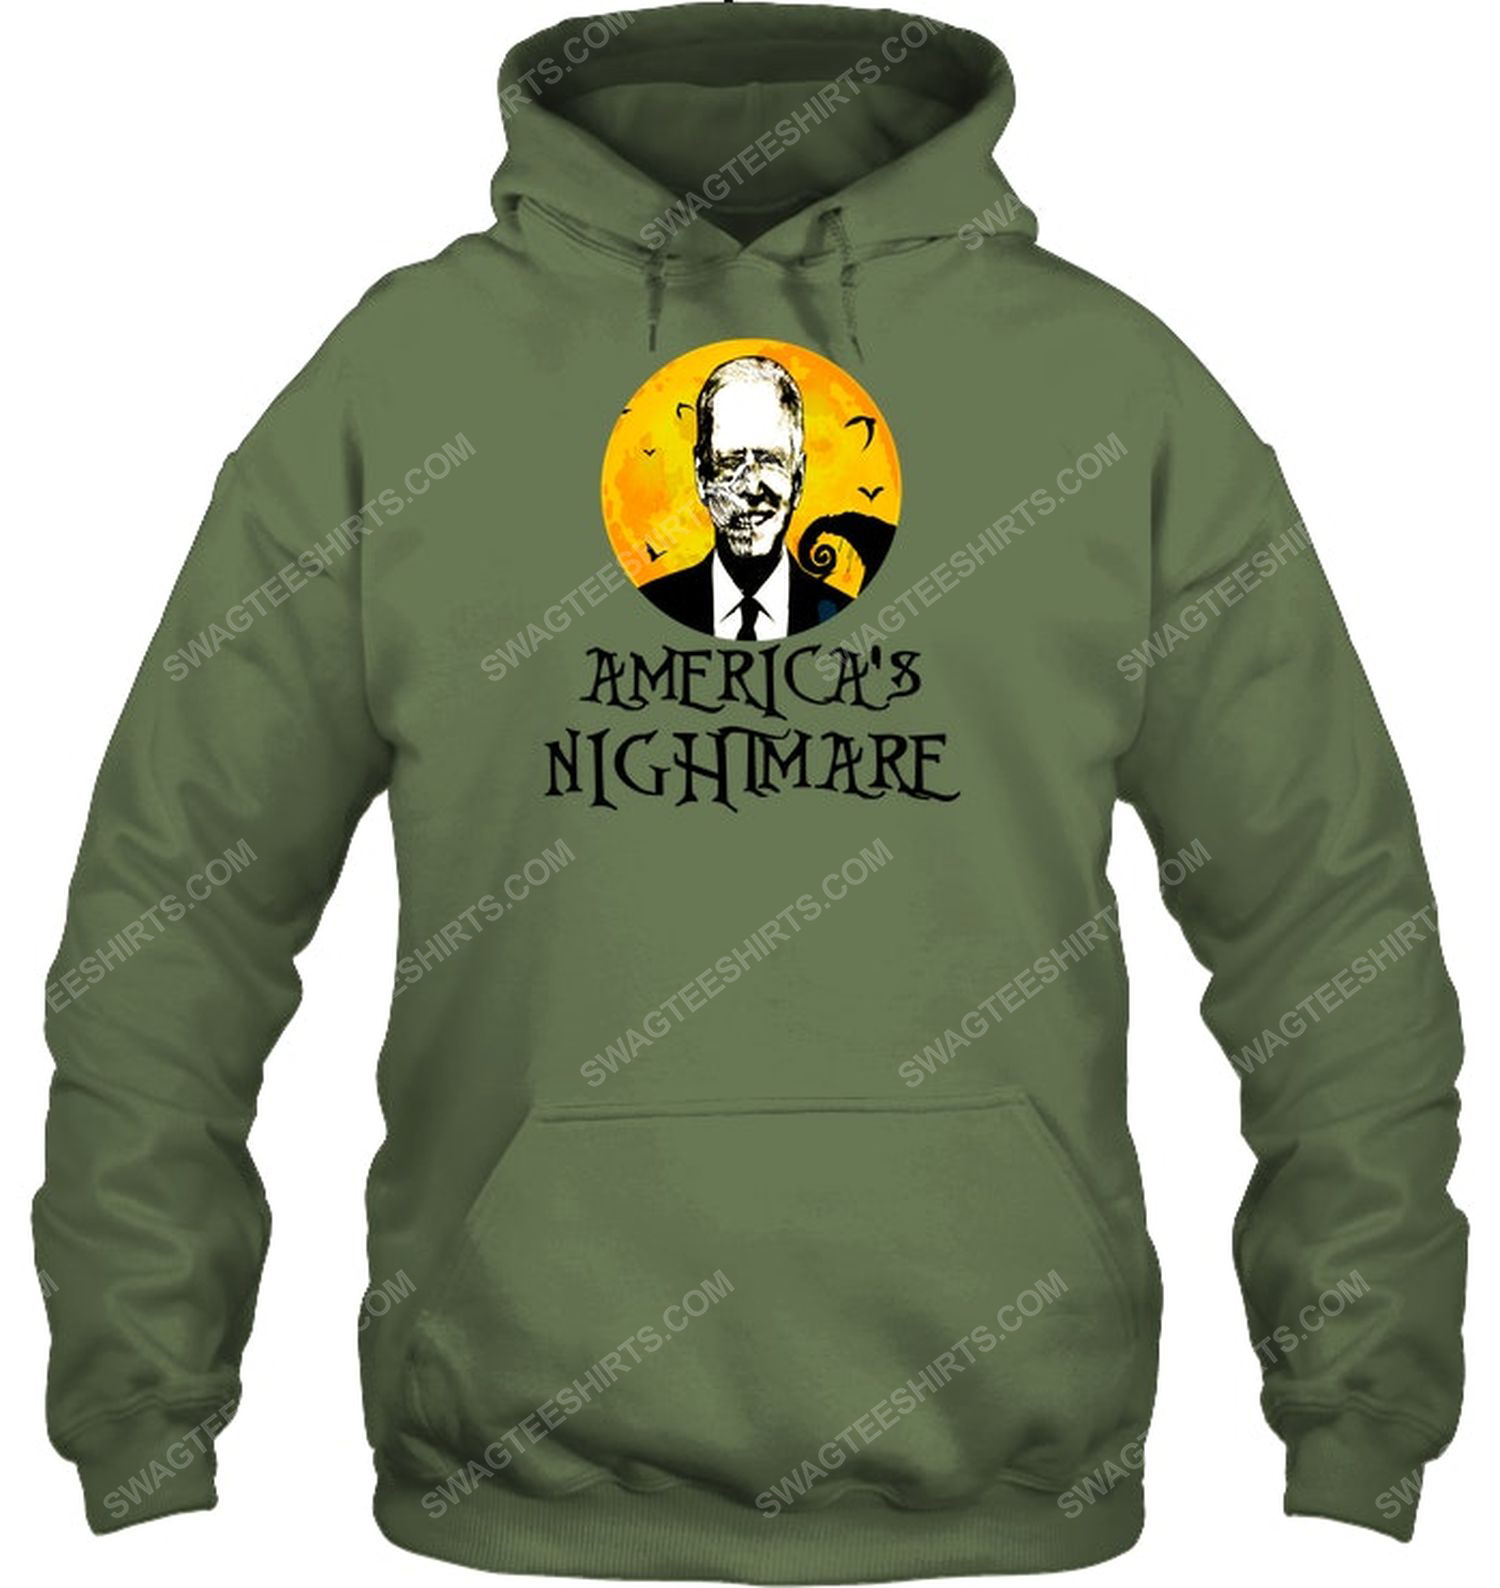 Joe biden america's nightmare in halloween political hoodie